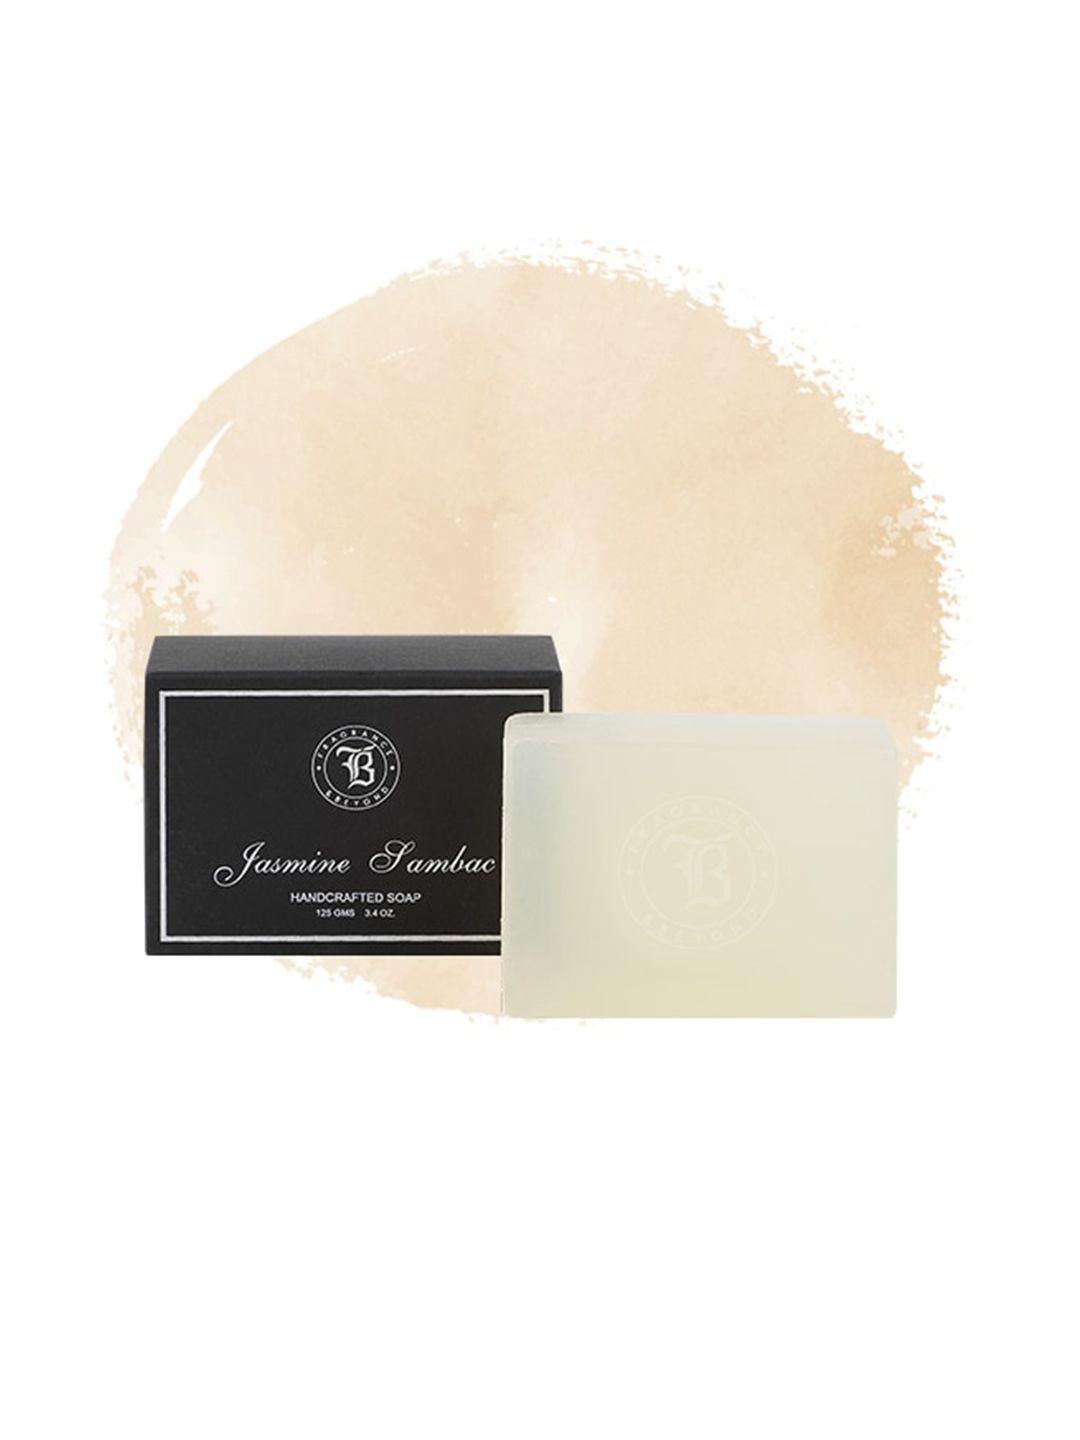 fragrance & beyond jasmine sambac natural soap - 125g